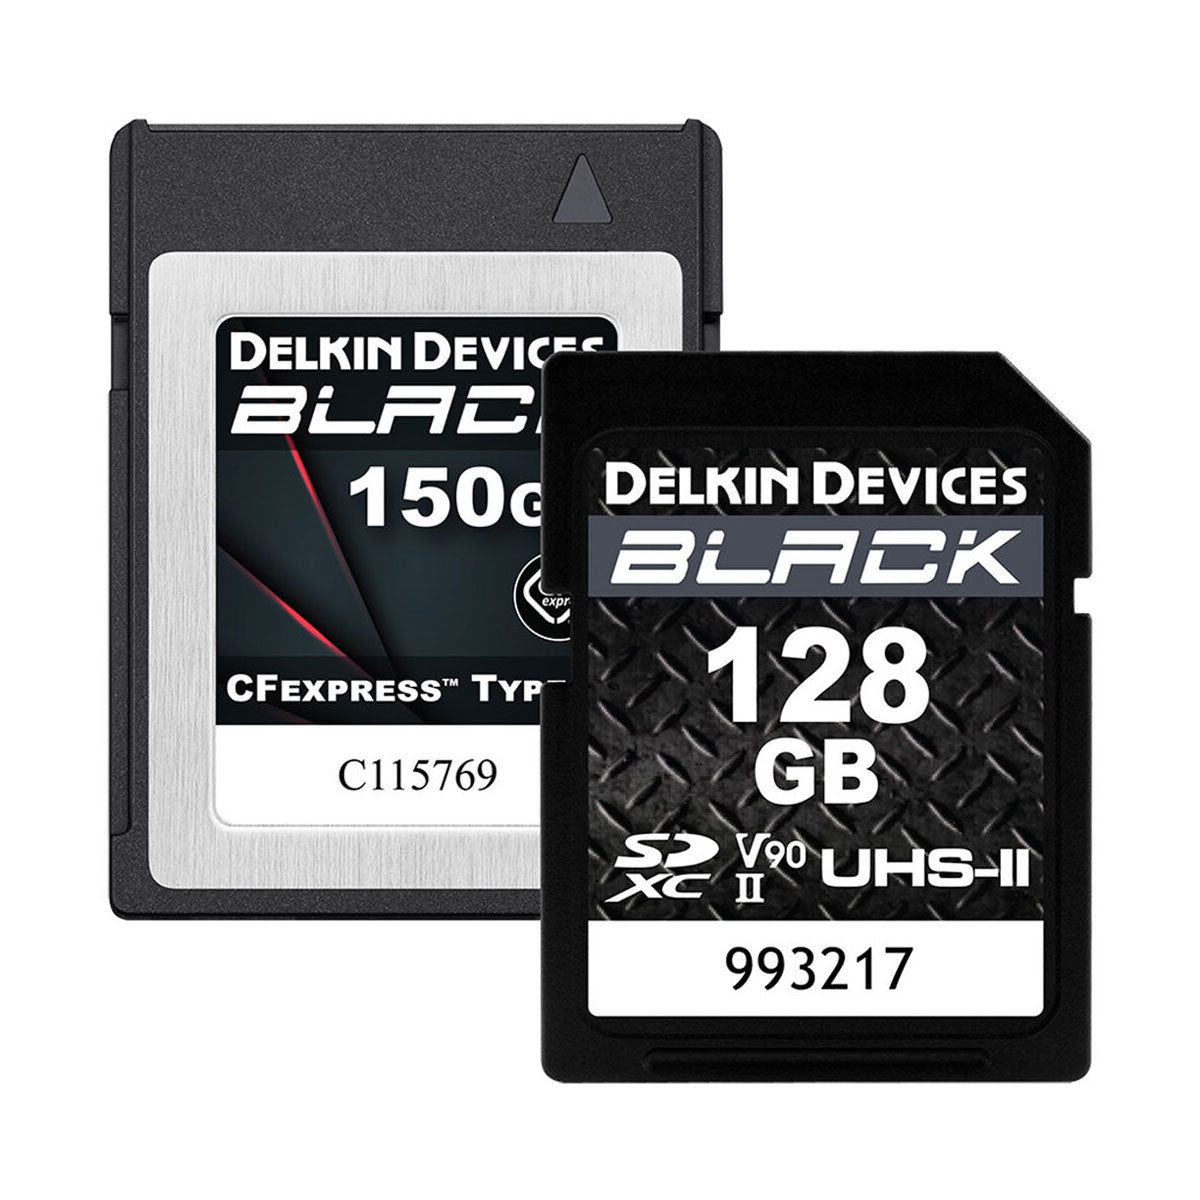 Delkin BLACK 150GB CFexpress Type B & BLACK 128GB UHS-II SDXC (V90) Memory Card Bundle